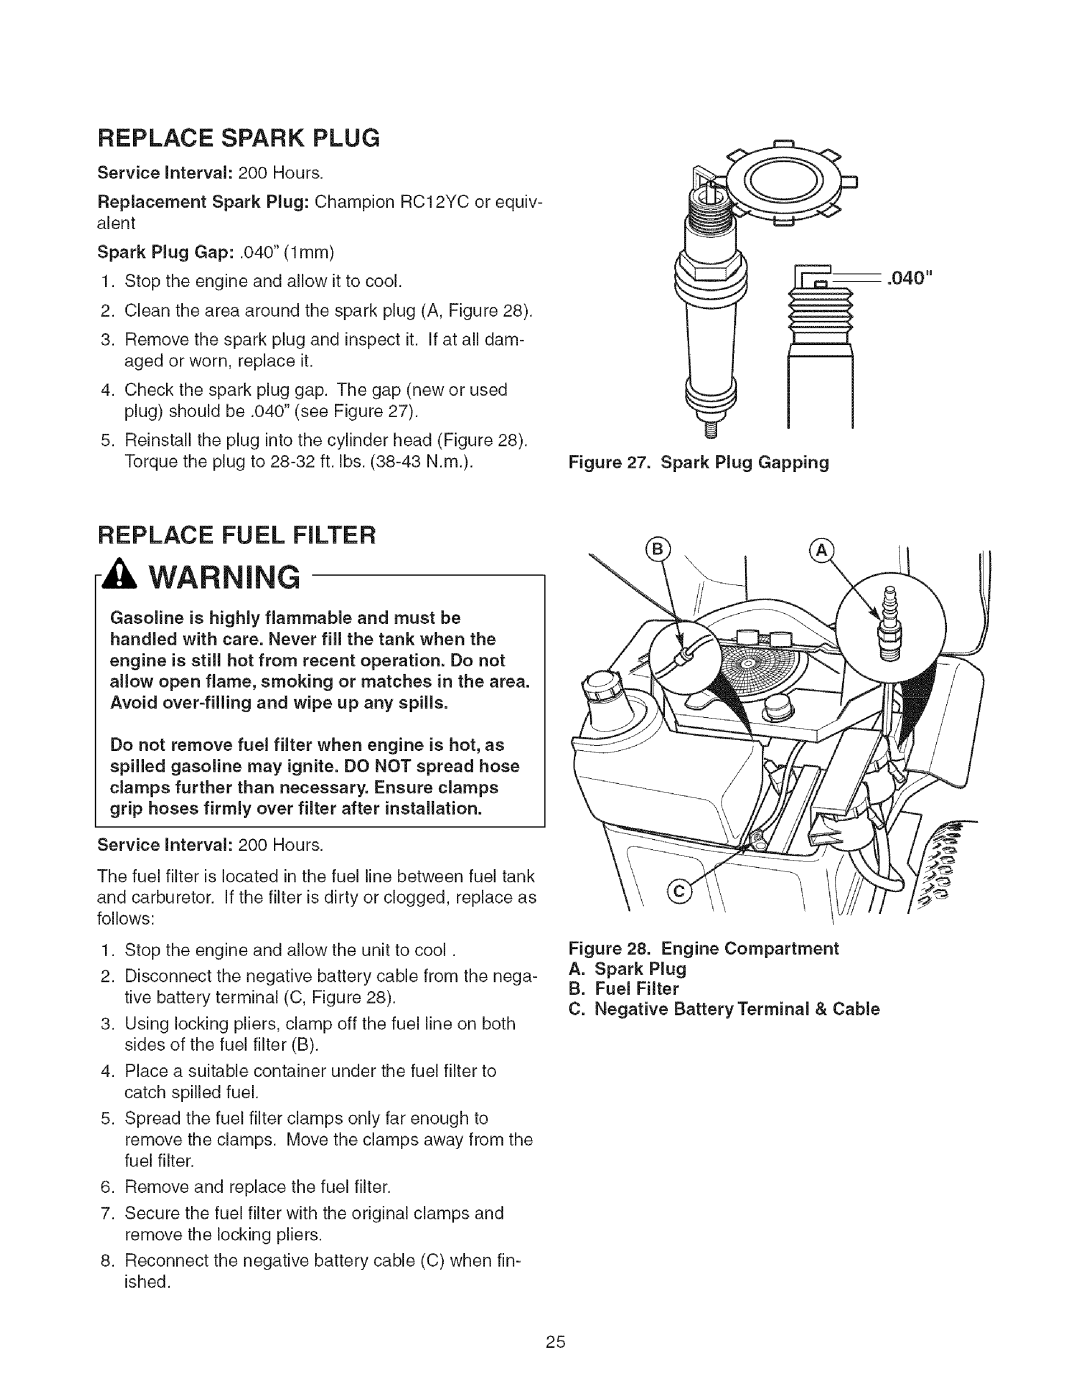 Craftsman 107.2777 manual Replace Fuel Filter, A. Spark Plug 